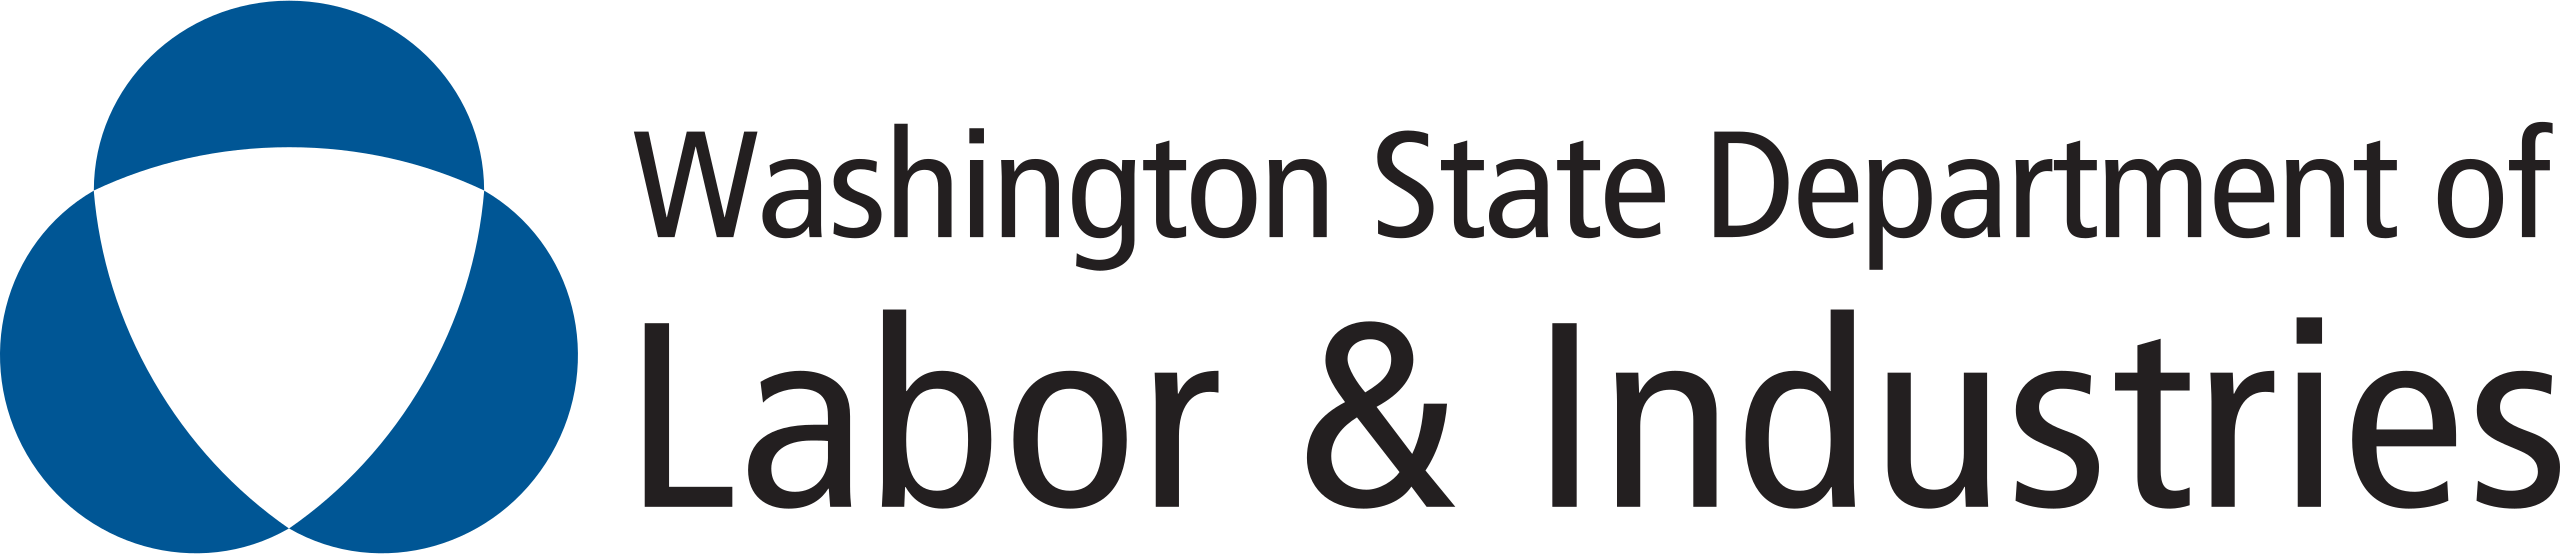 Washington State Department of Labor Industries logo